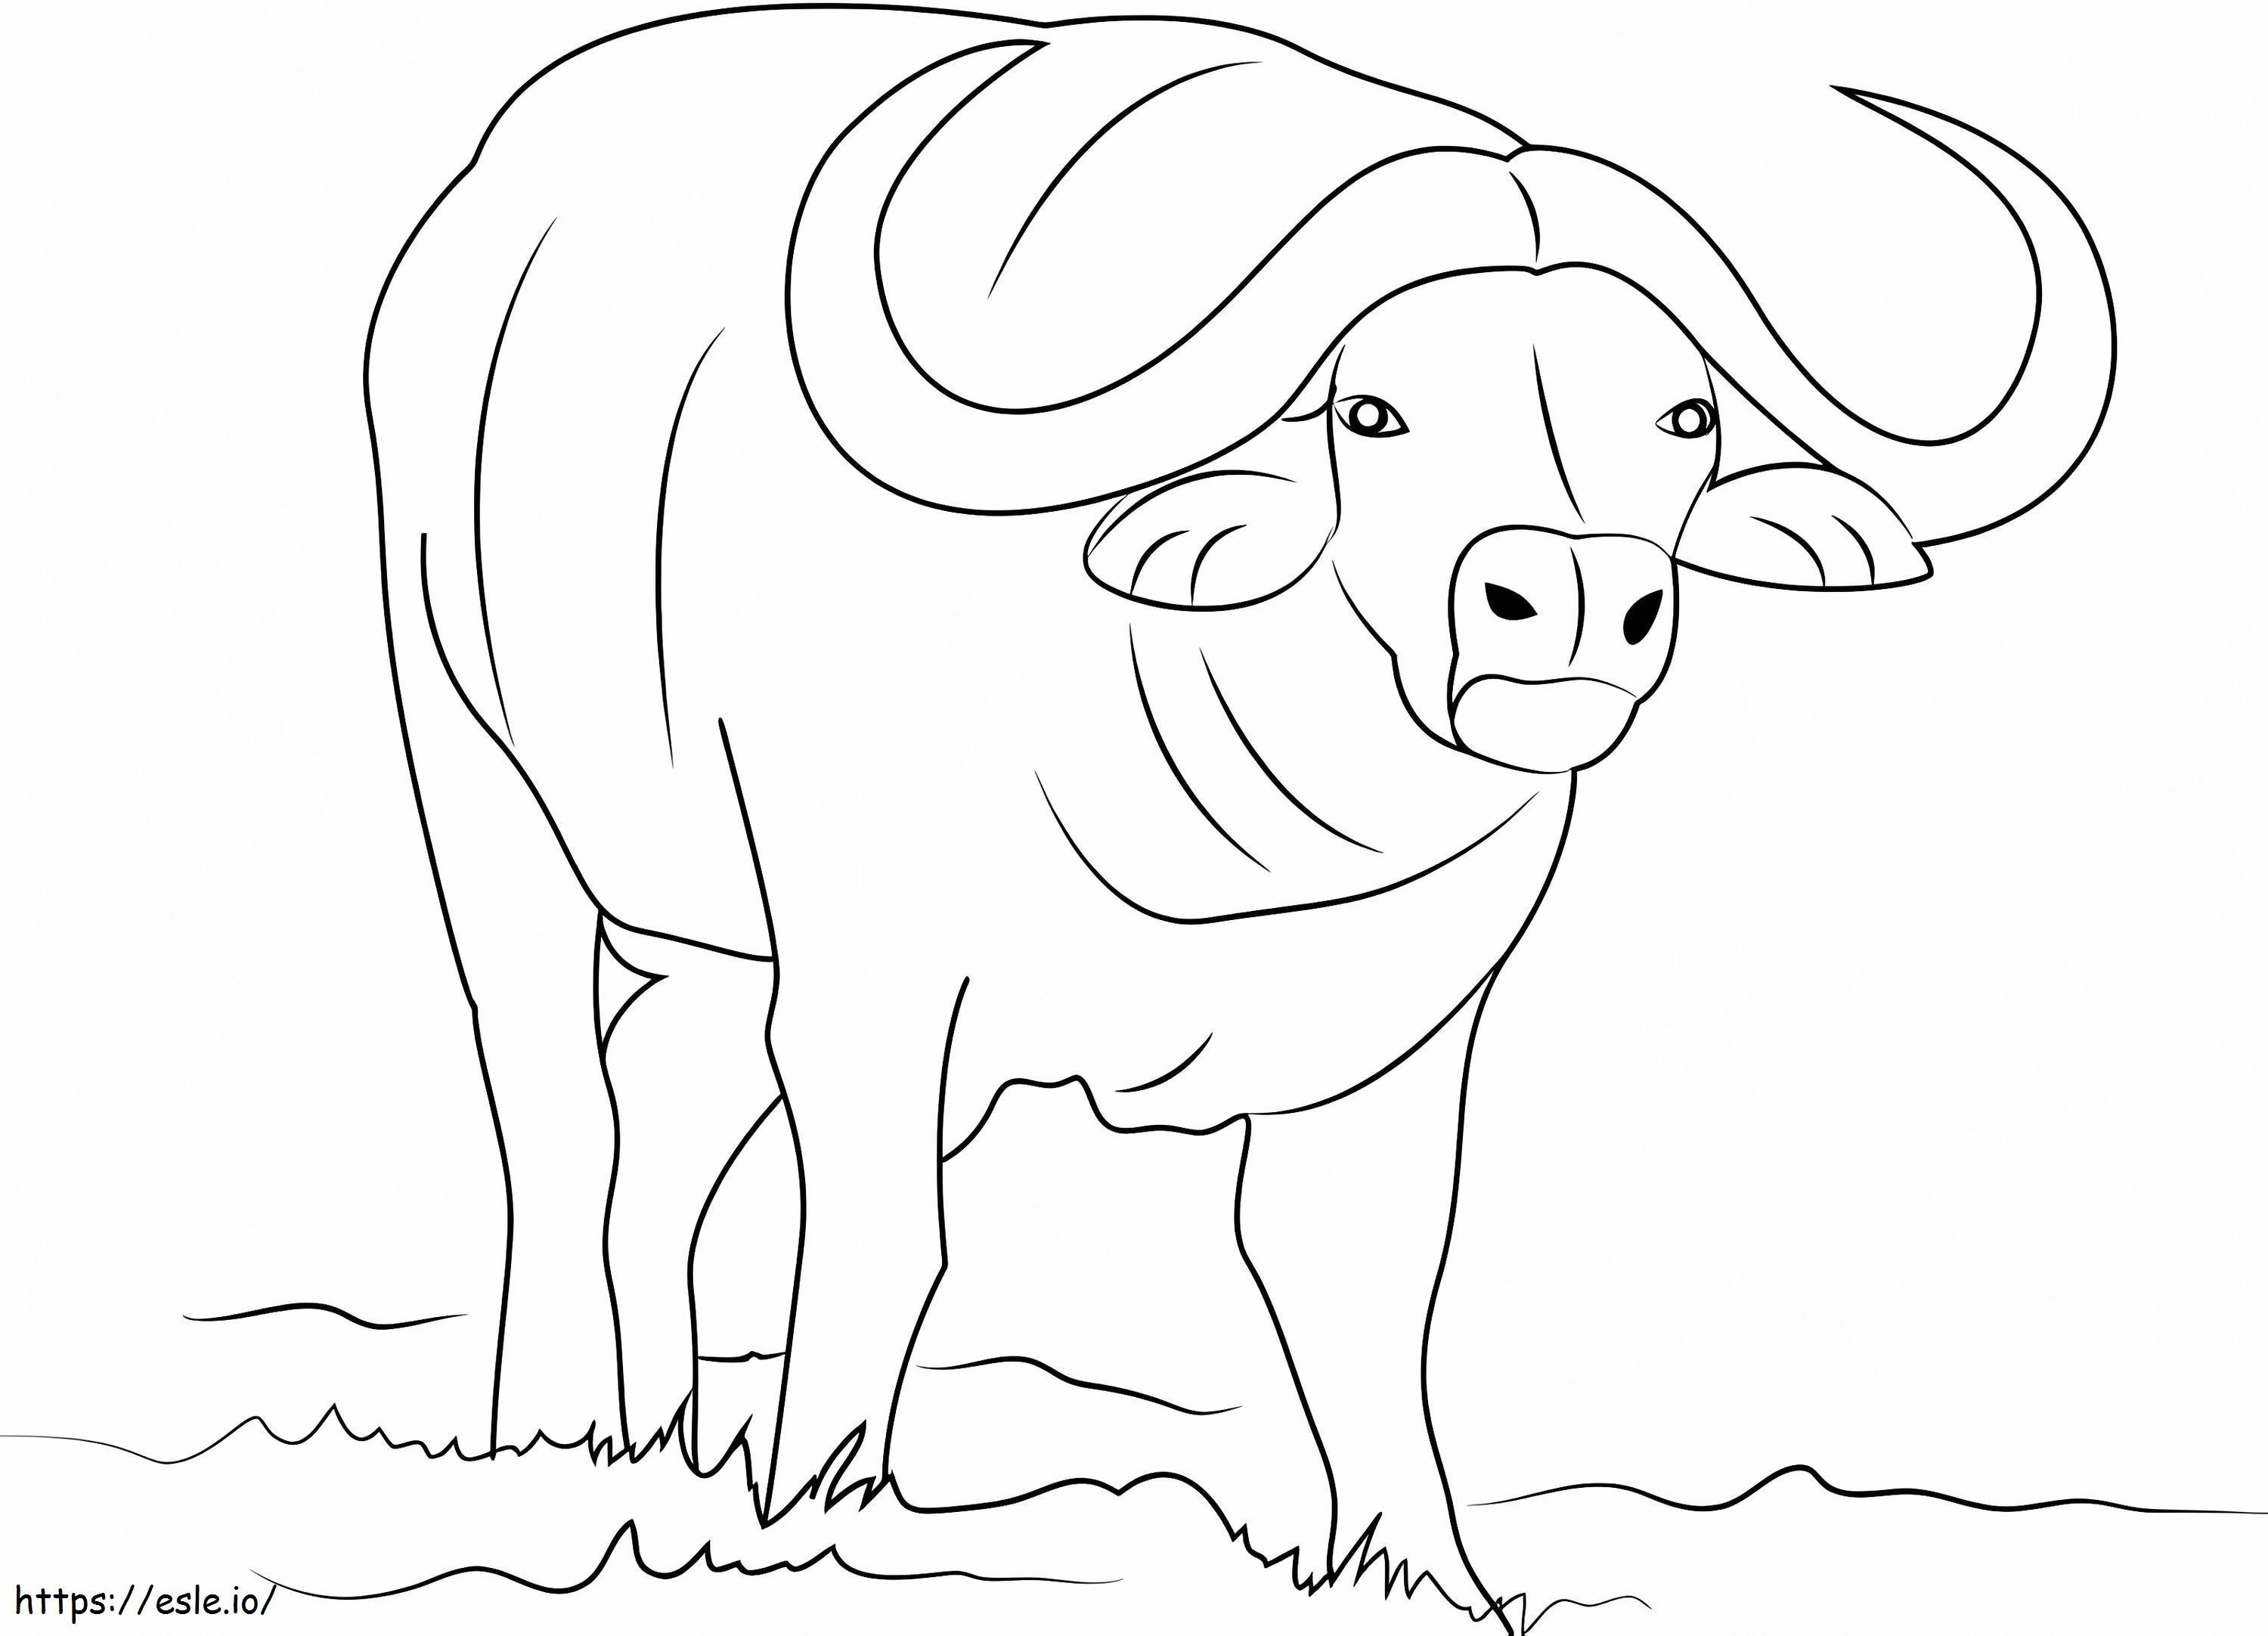 Buffalo Simply coloring page